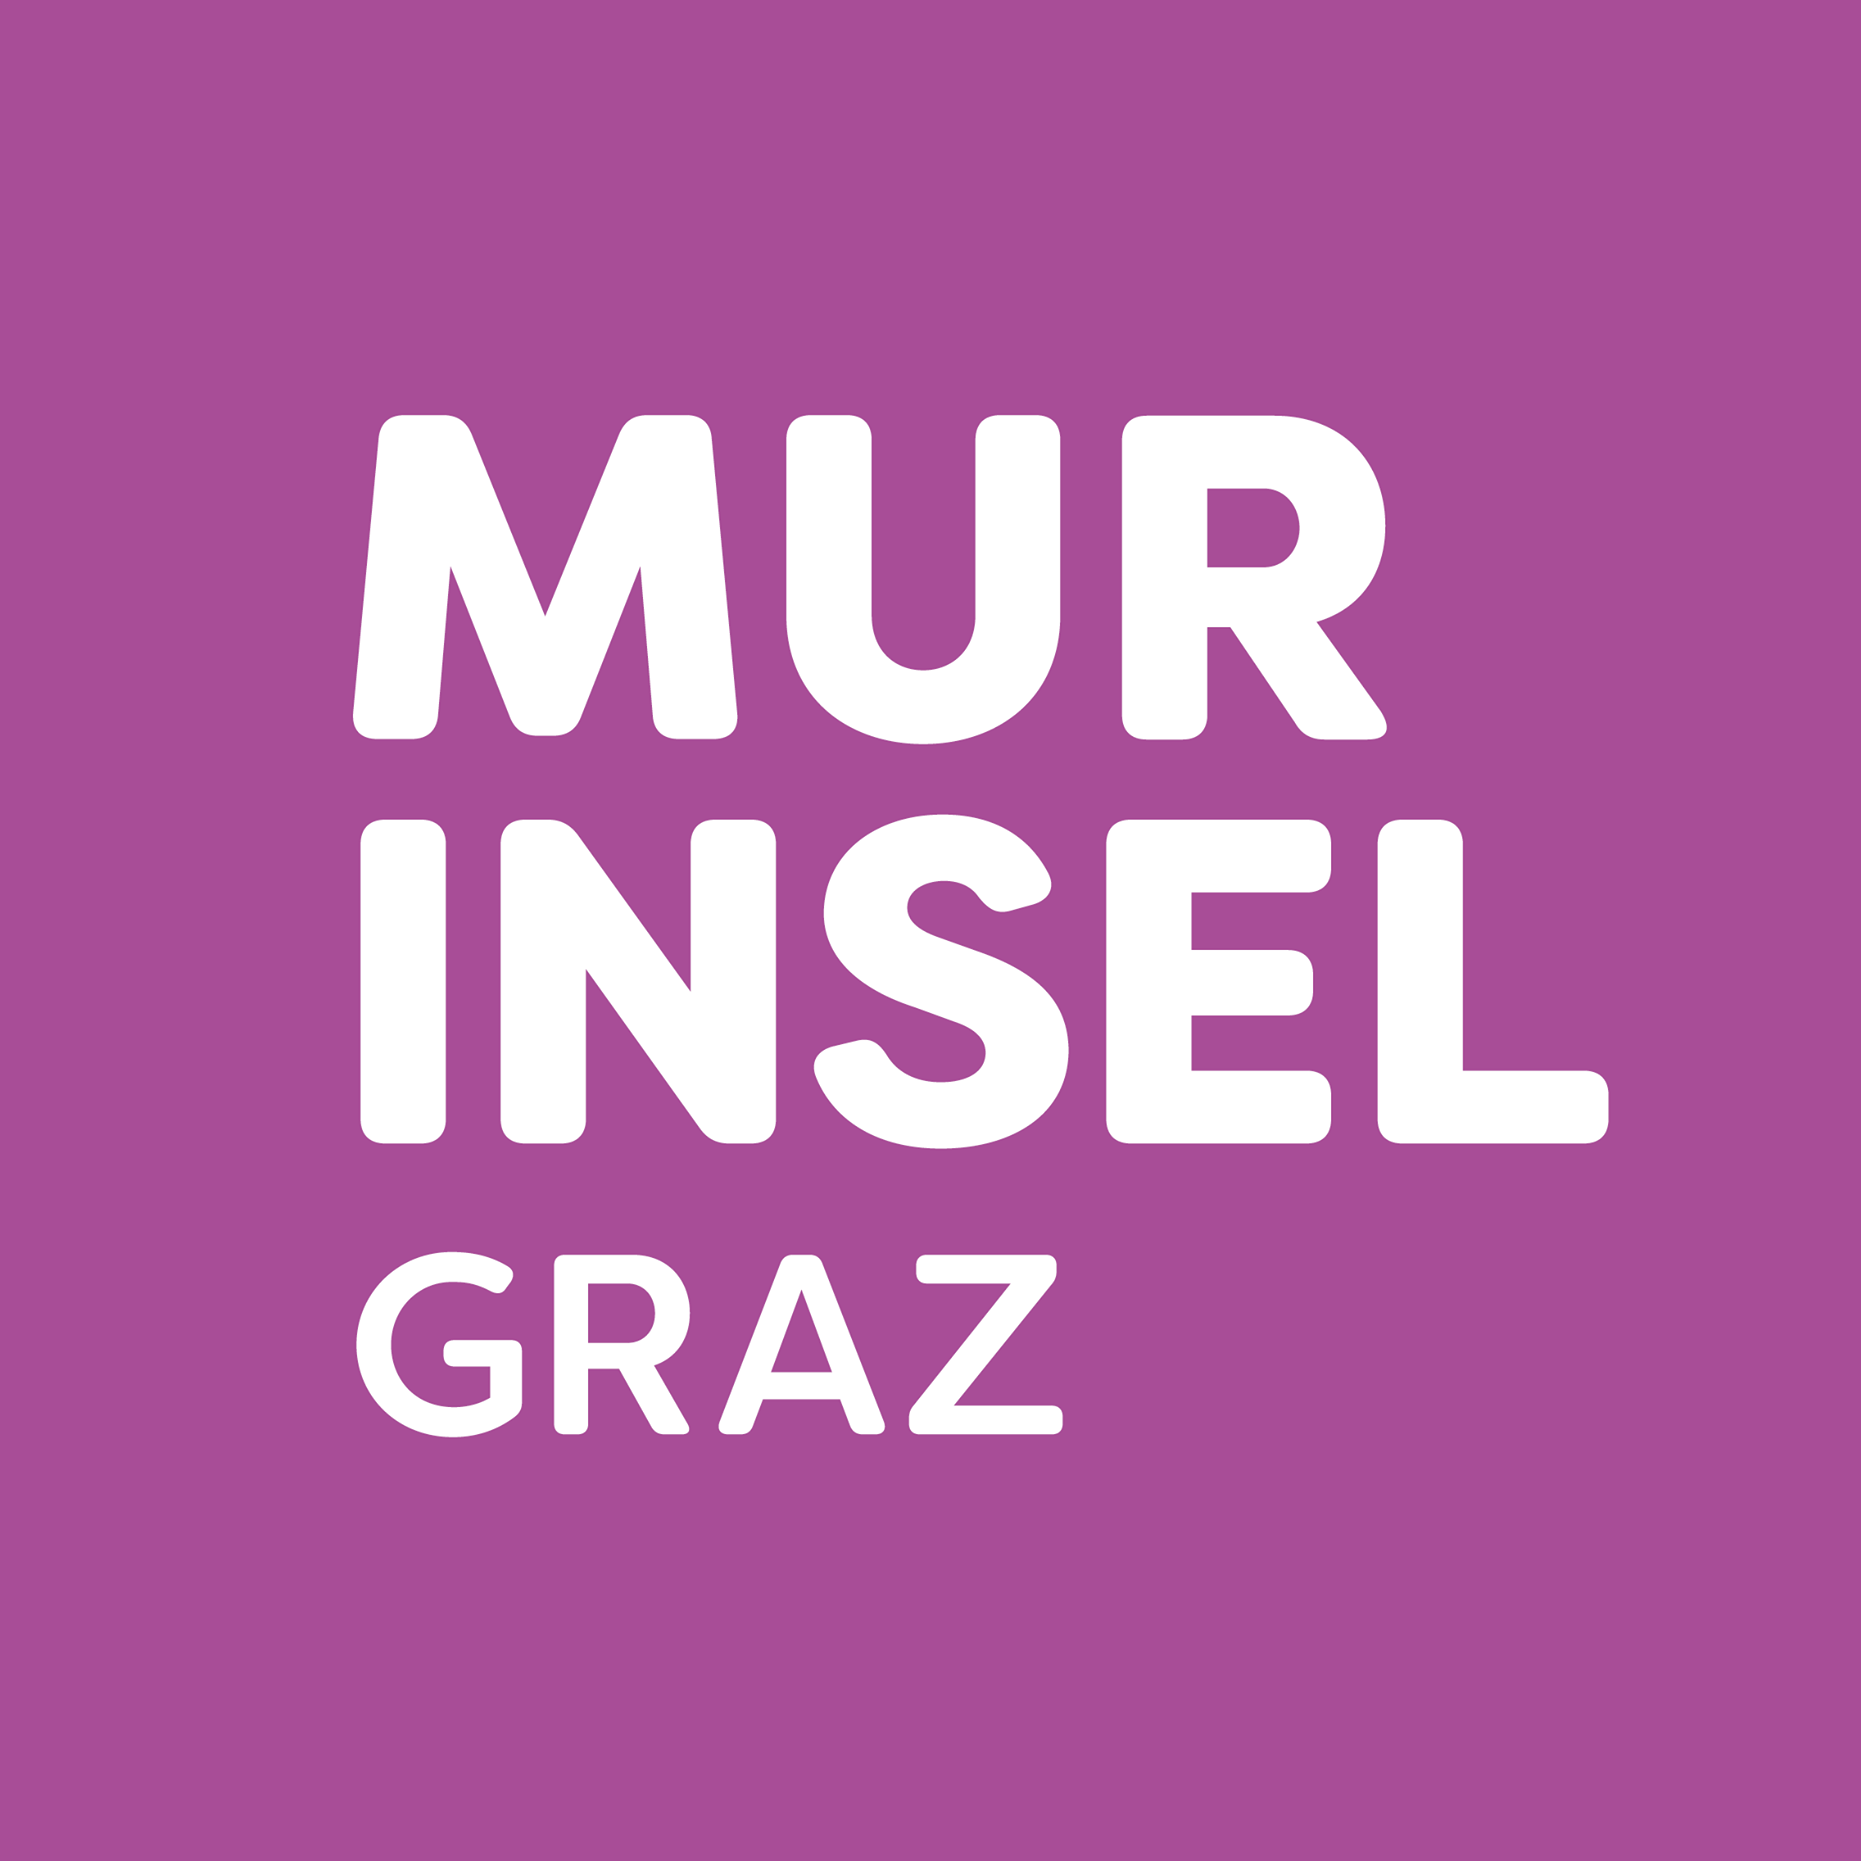 www.murinselgraz.at